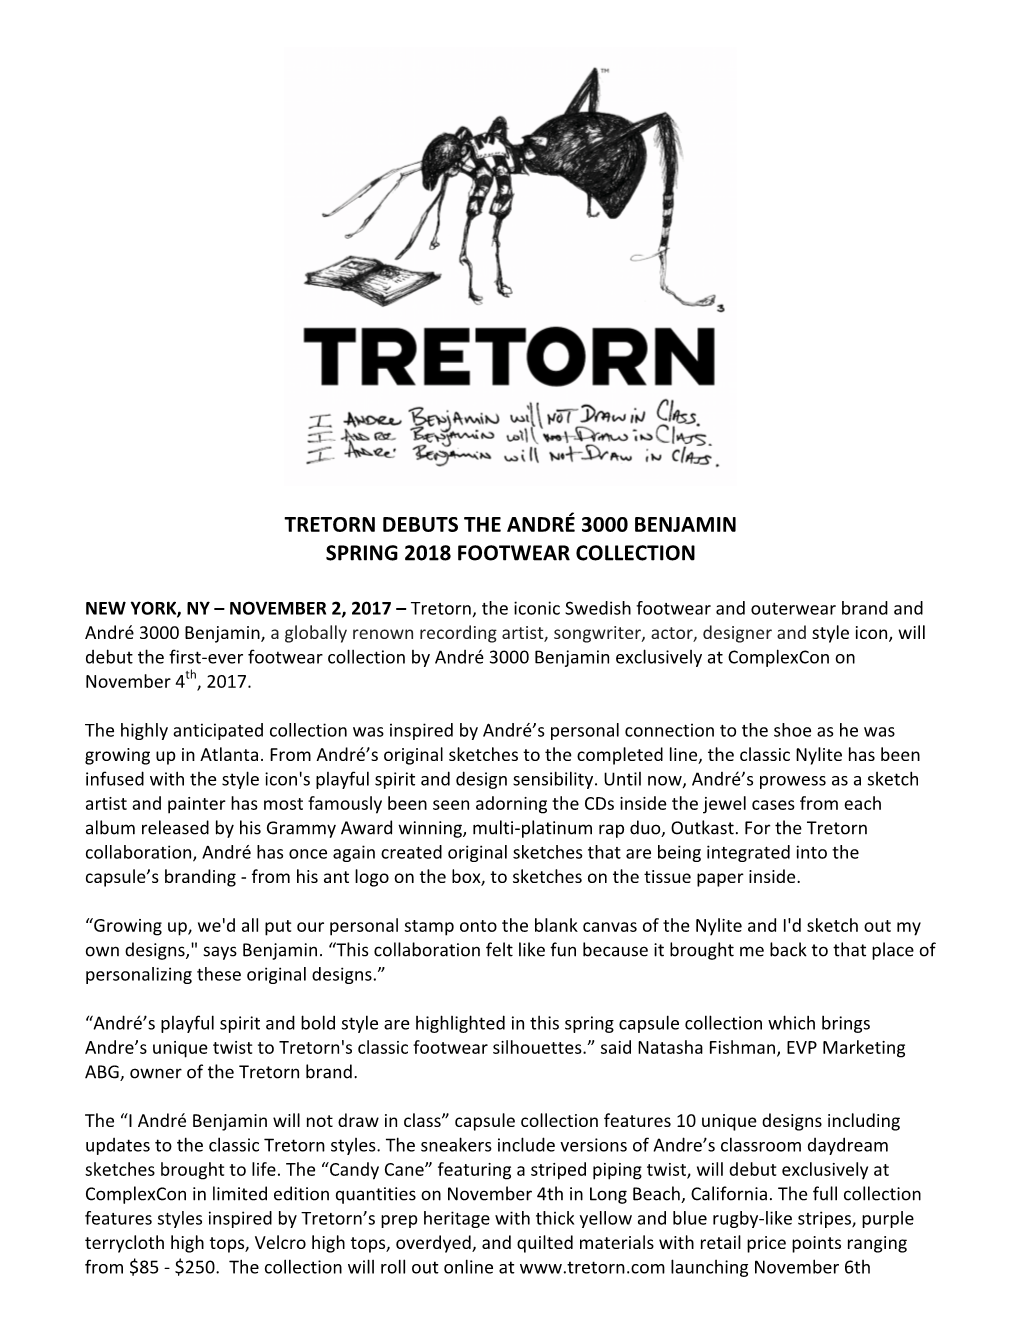 Tretorn Debuts the André 3000 Benjamin Spring 2018 Footwear Collection